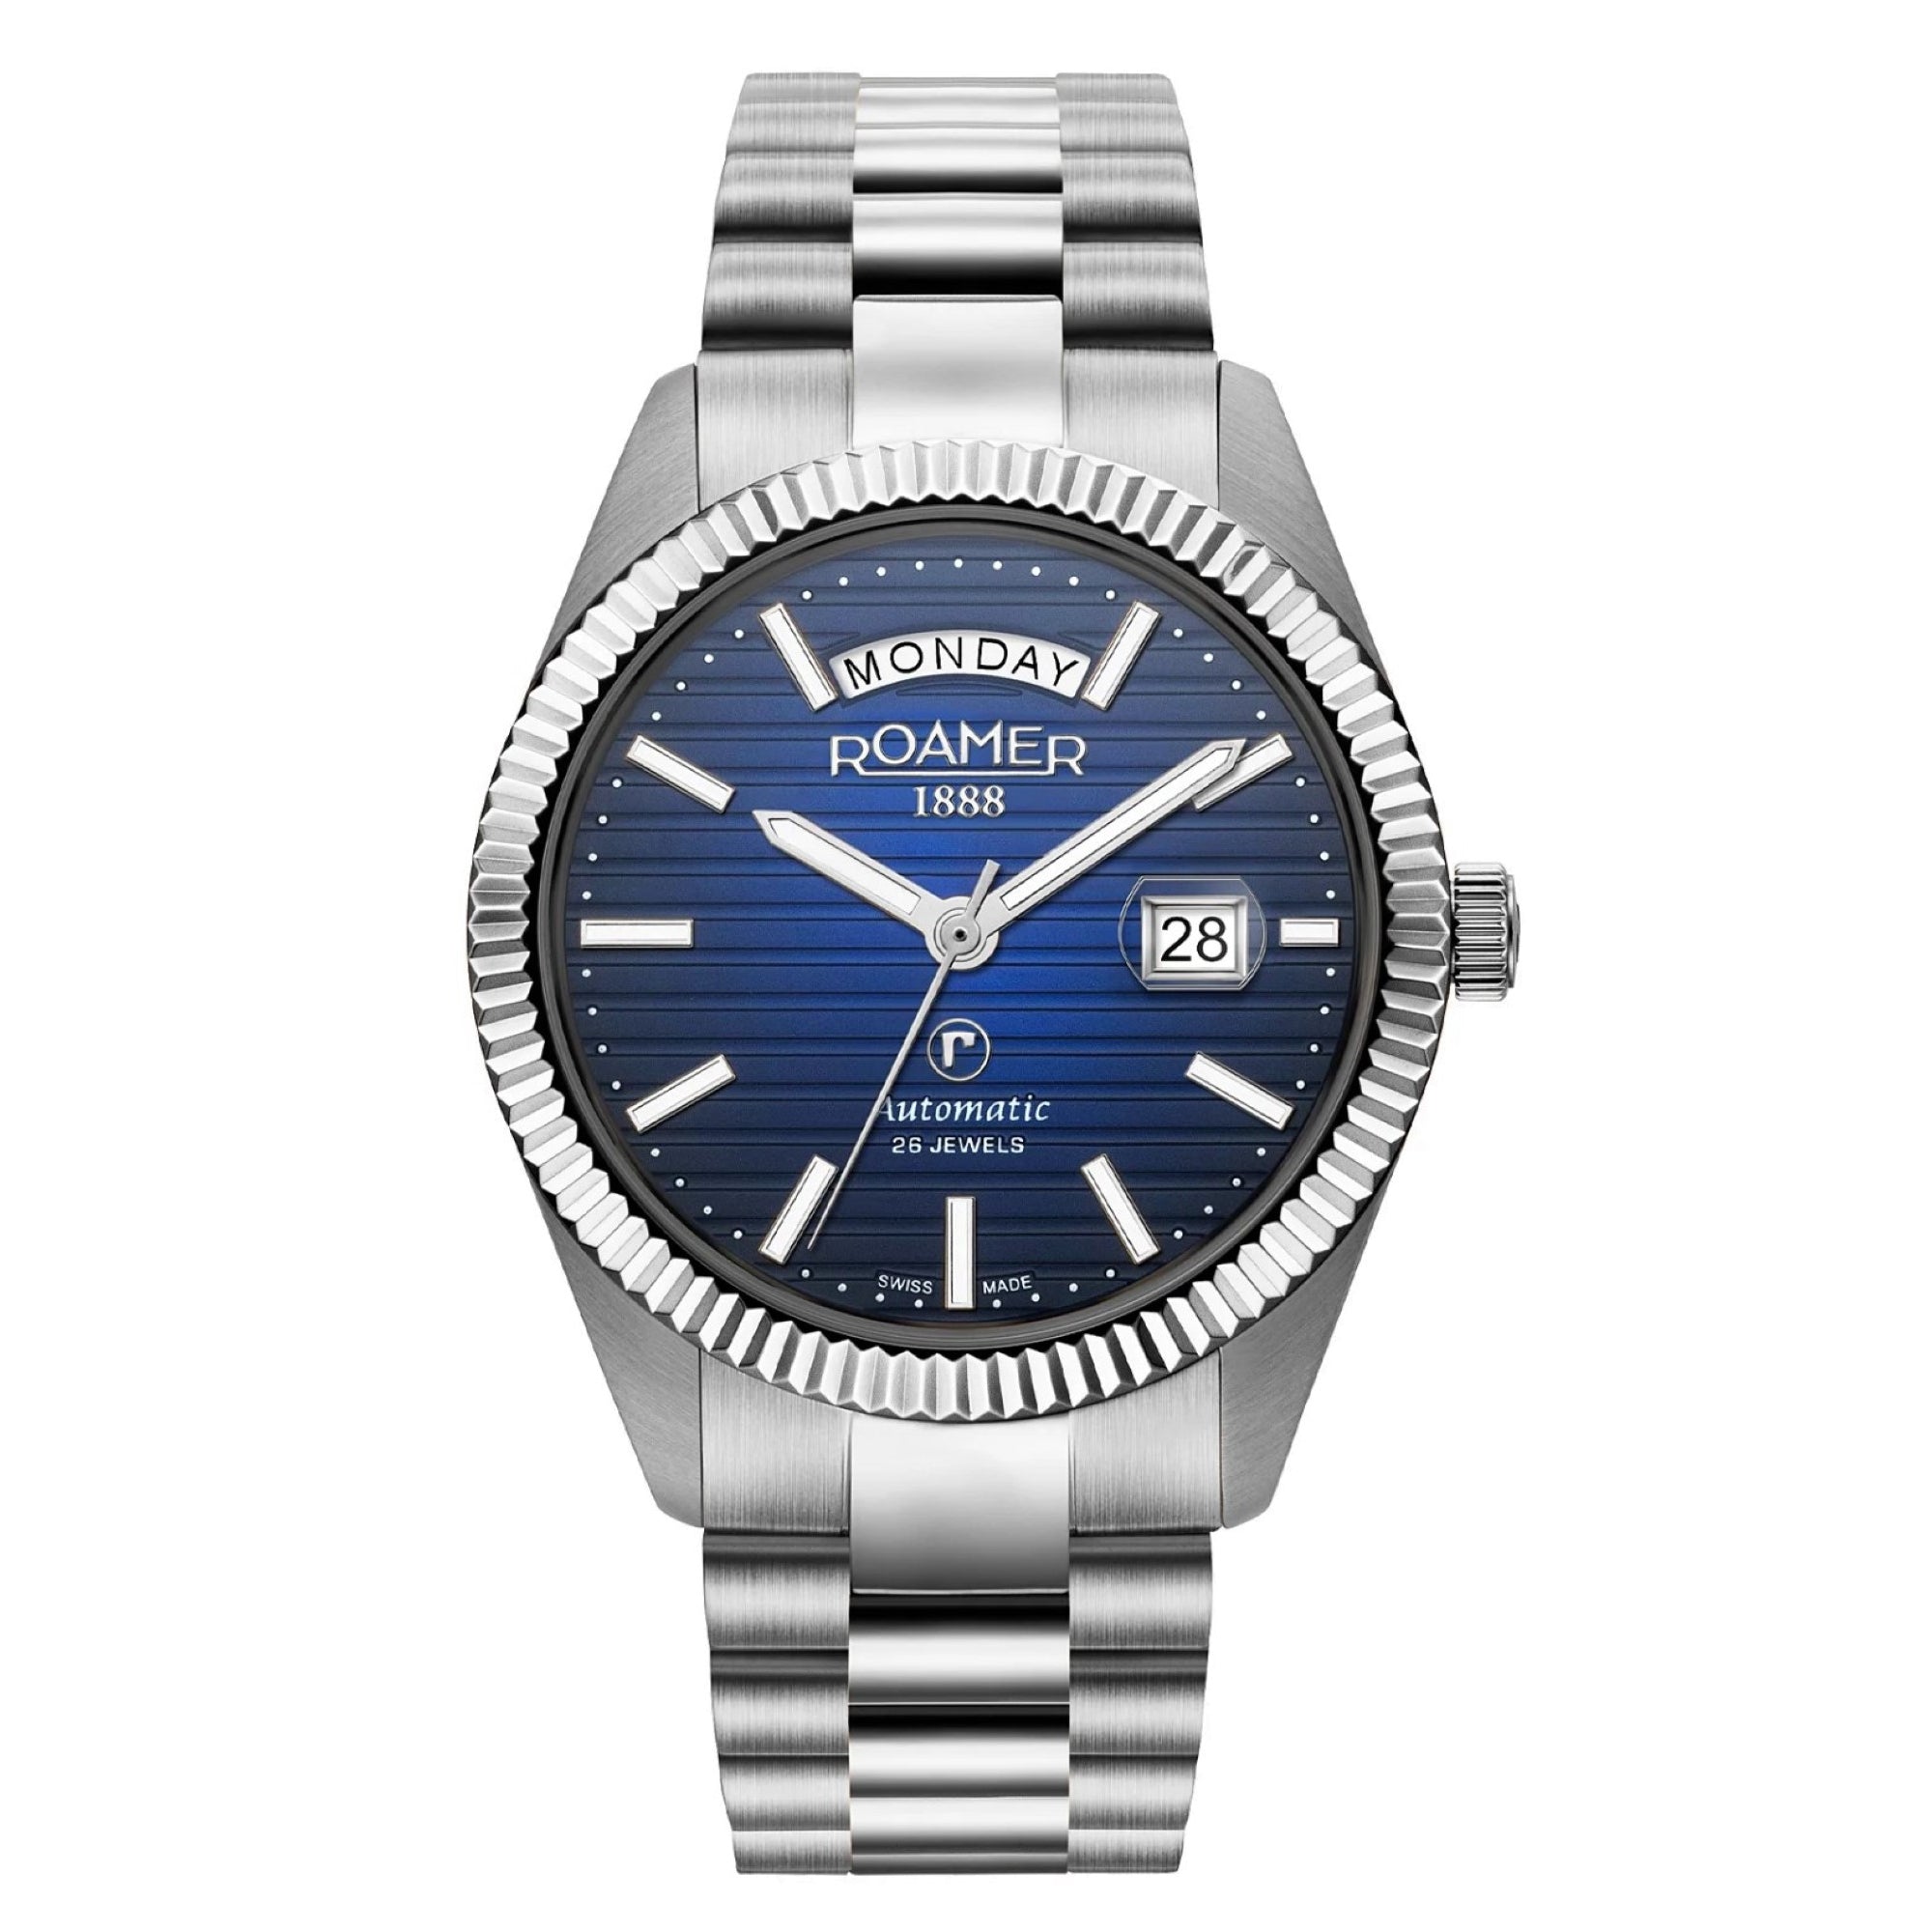 Photos - Wrist Watch Roamer 981666 41 45 50 Daydate II Automatic Steel Bracelet Wristwatch 